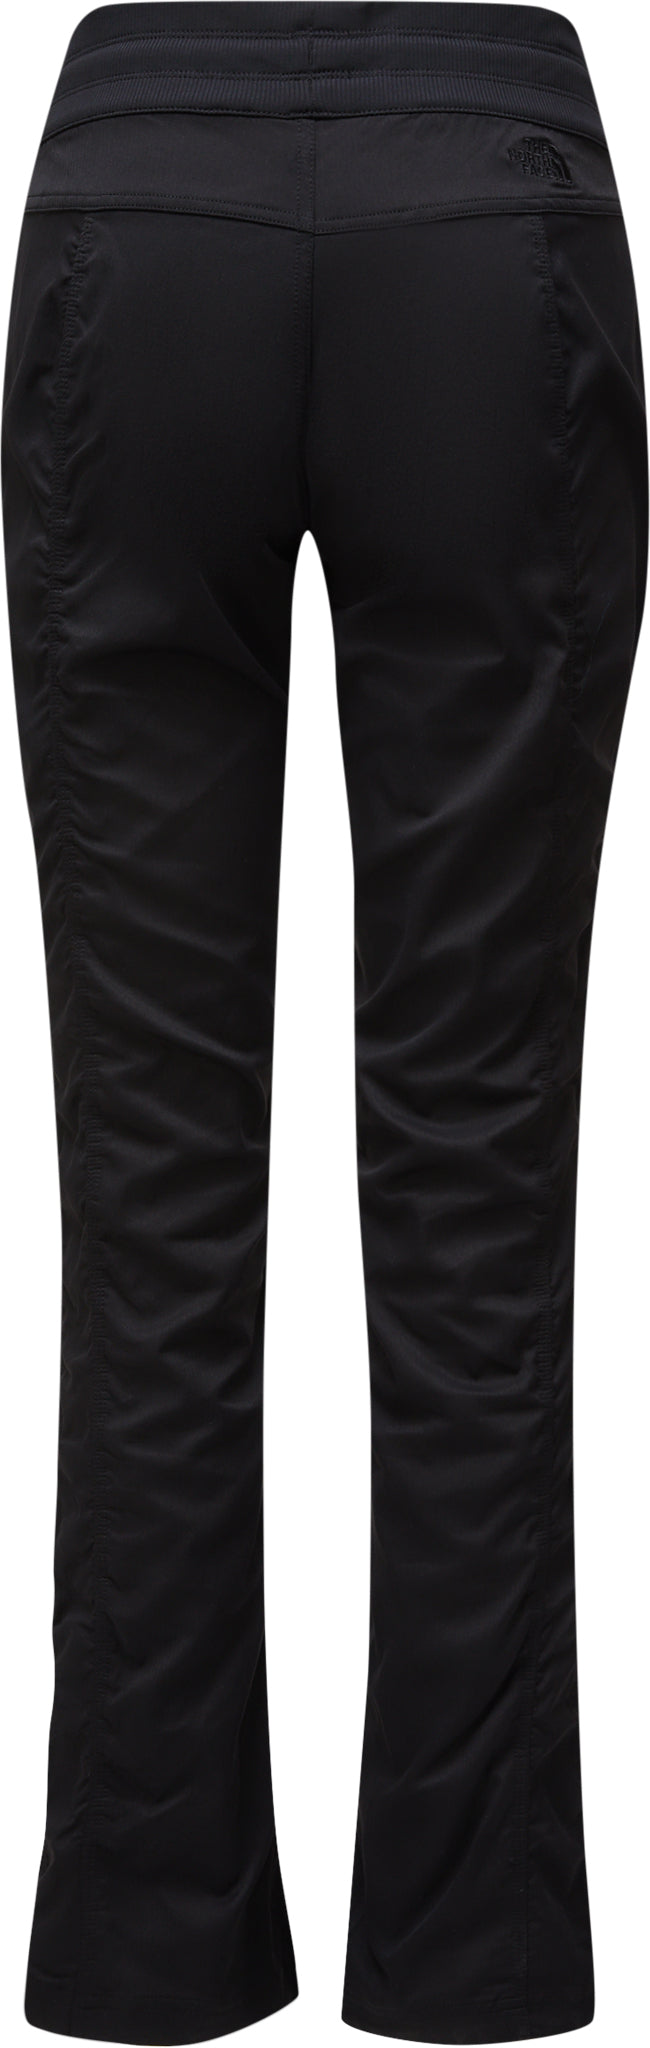  Womens Essential Capri Legging Comfortable 4-Way Stretch  Athletic Pants Mid-Waist Black Large